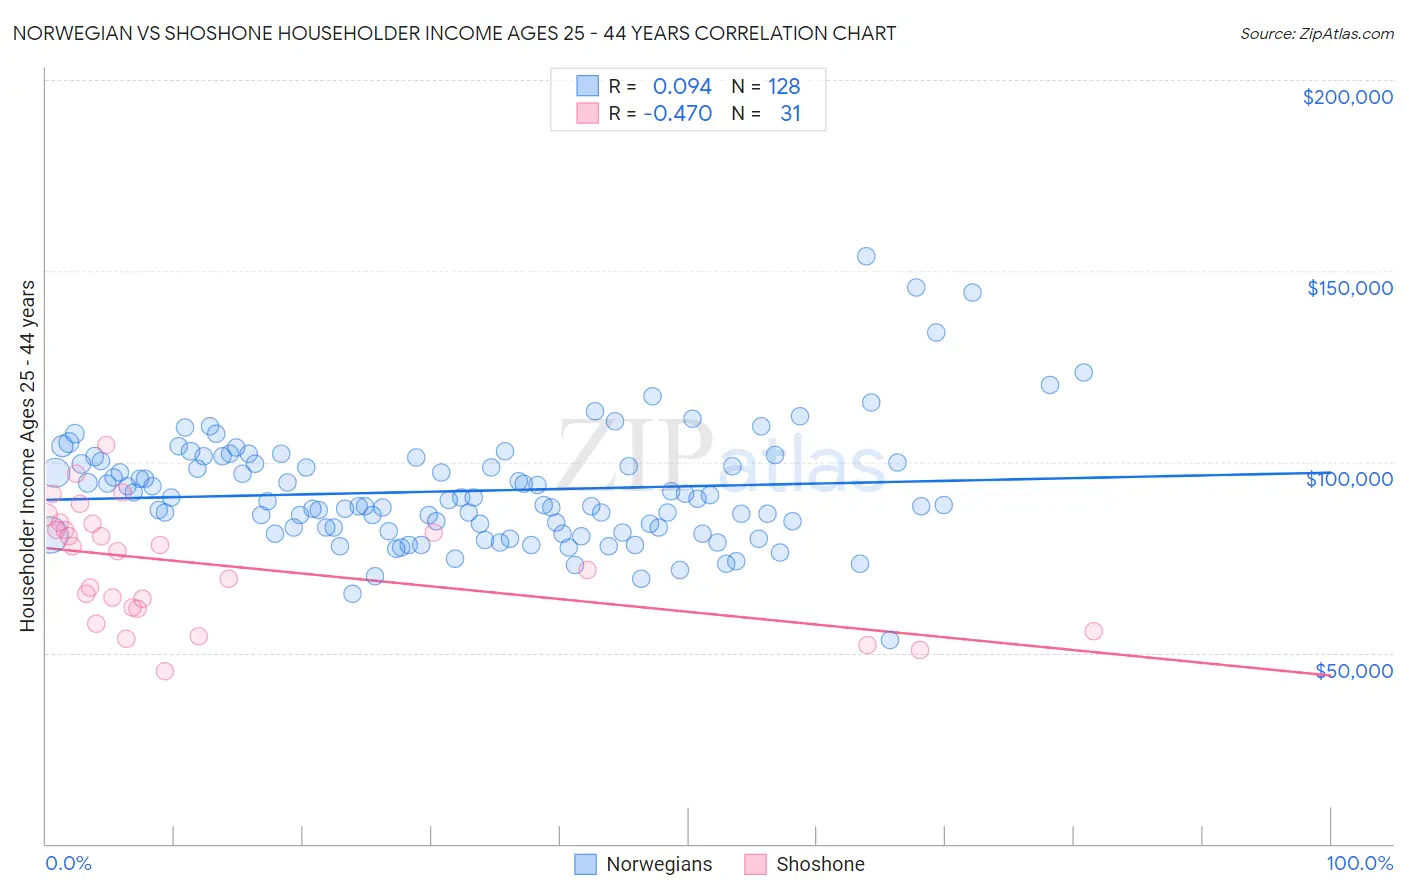 Norwegian vs Shoshone Householder Income Ages 25 - 44 years